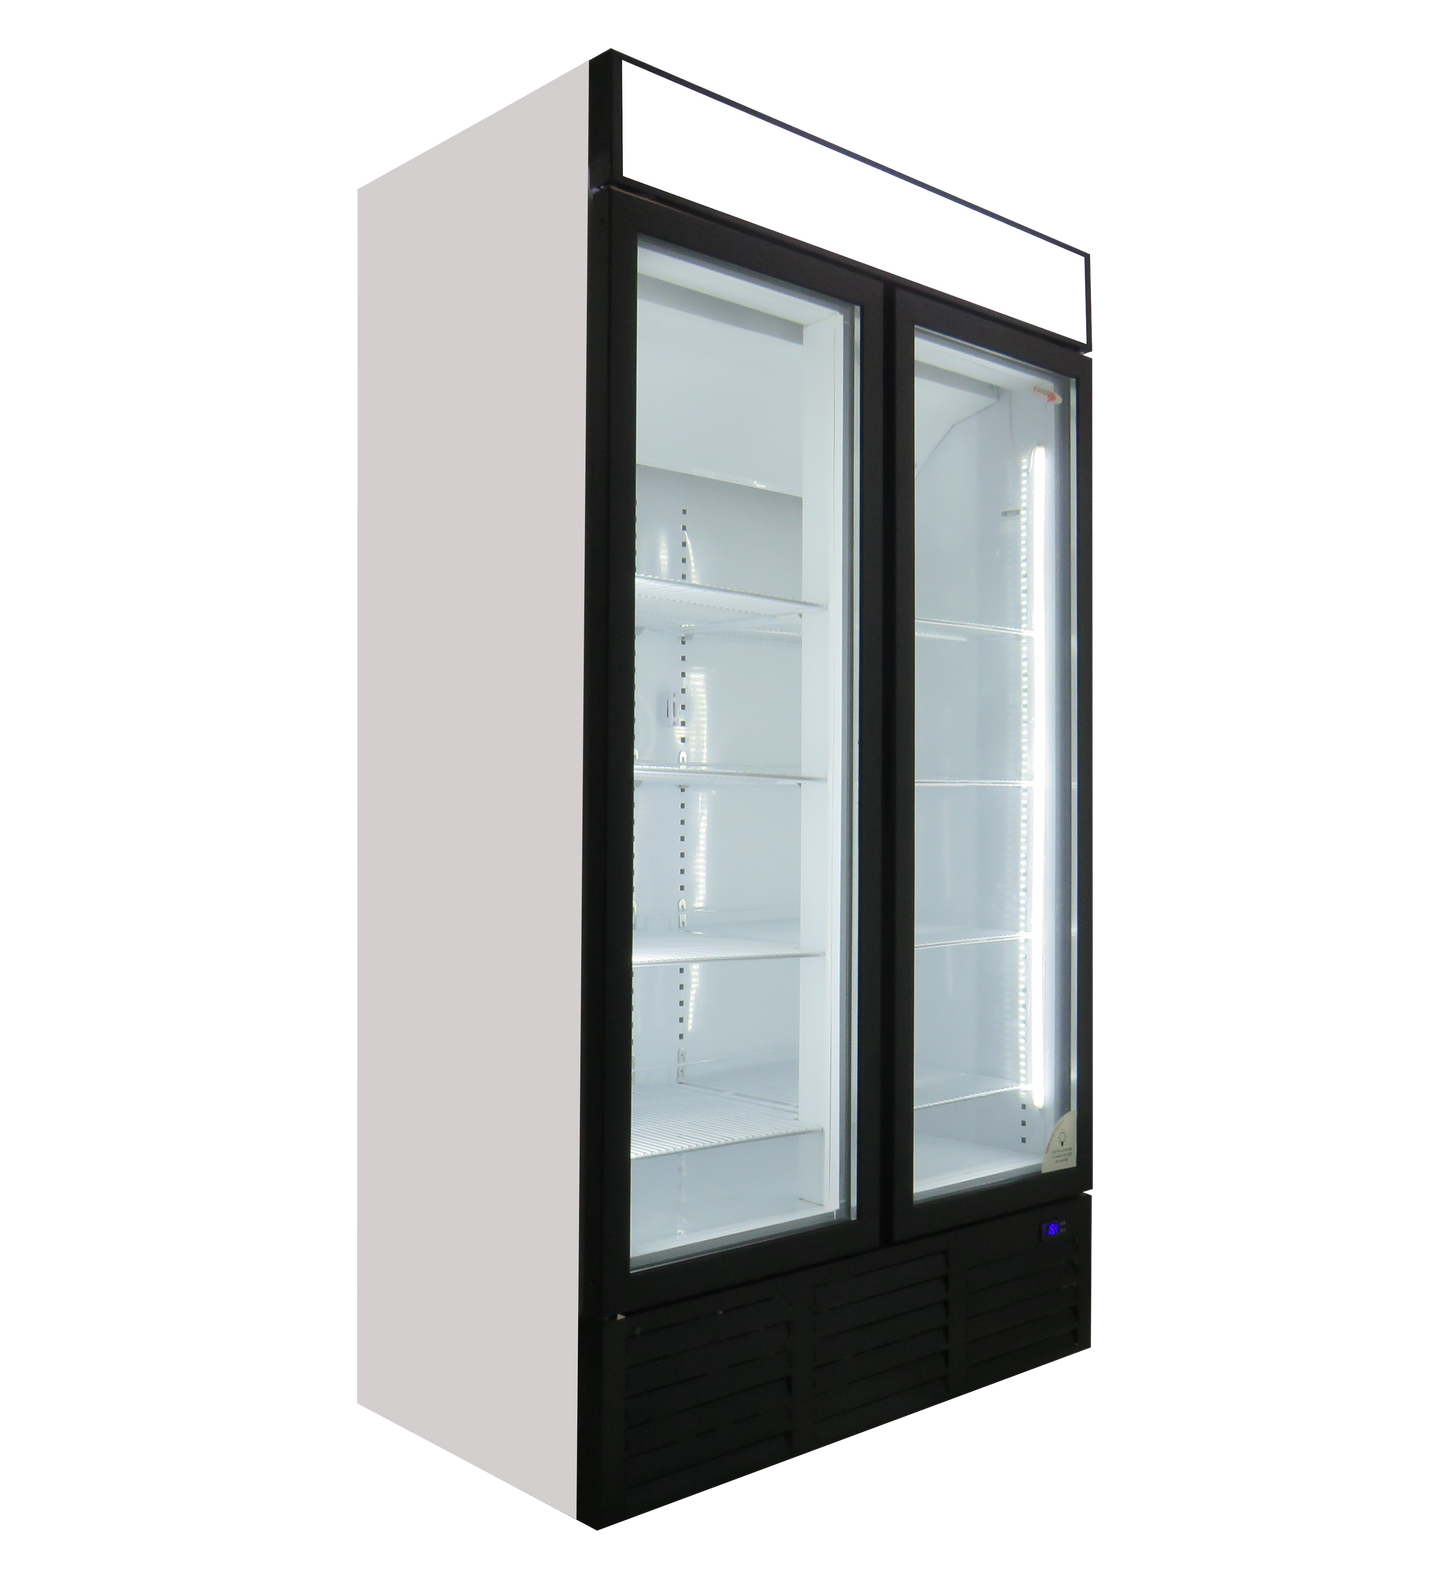 EU720 Fridge Star glass door upright freezer